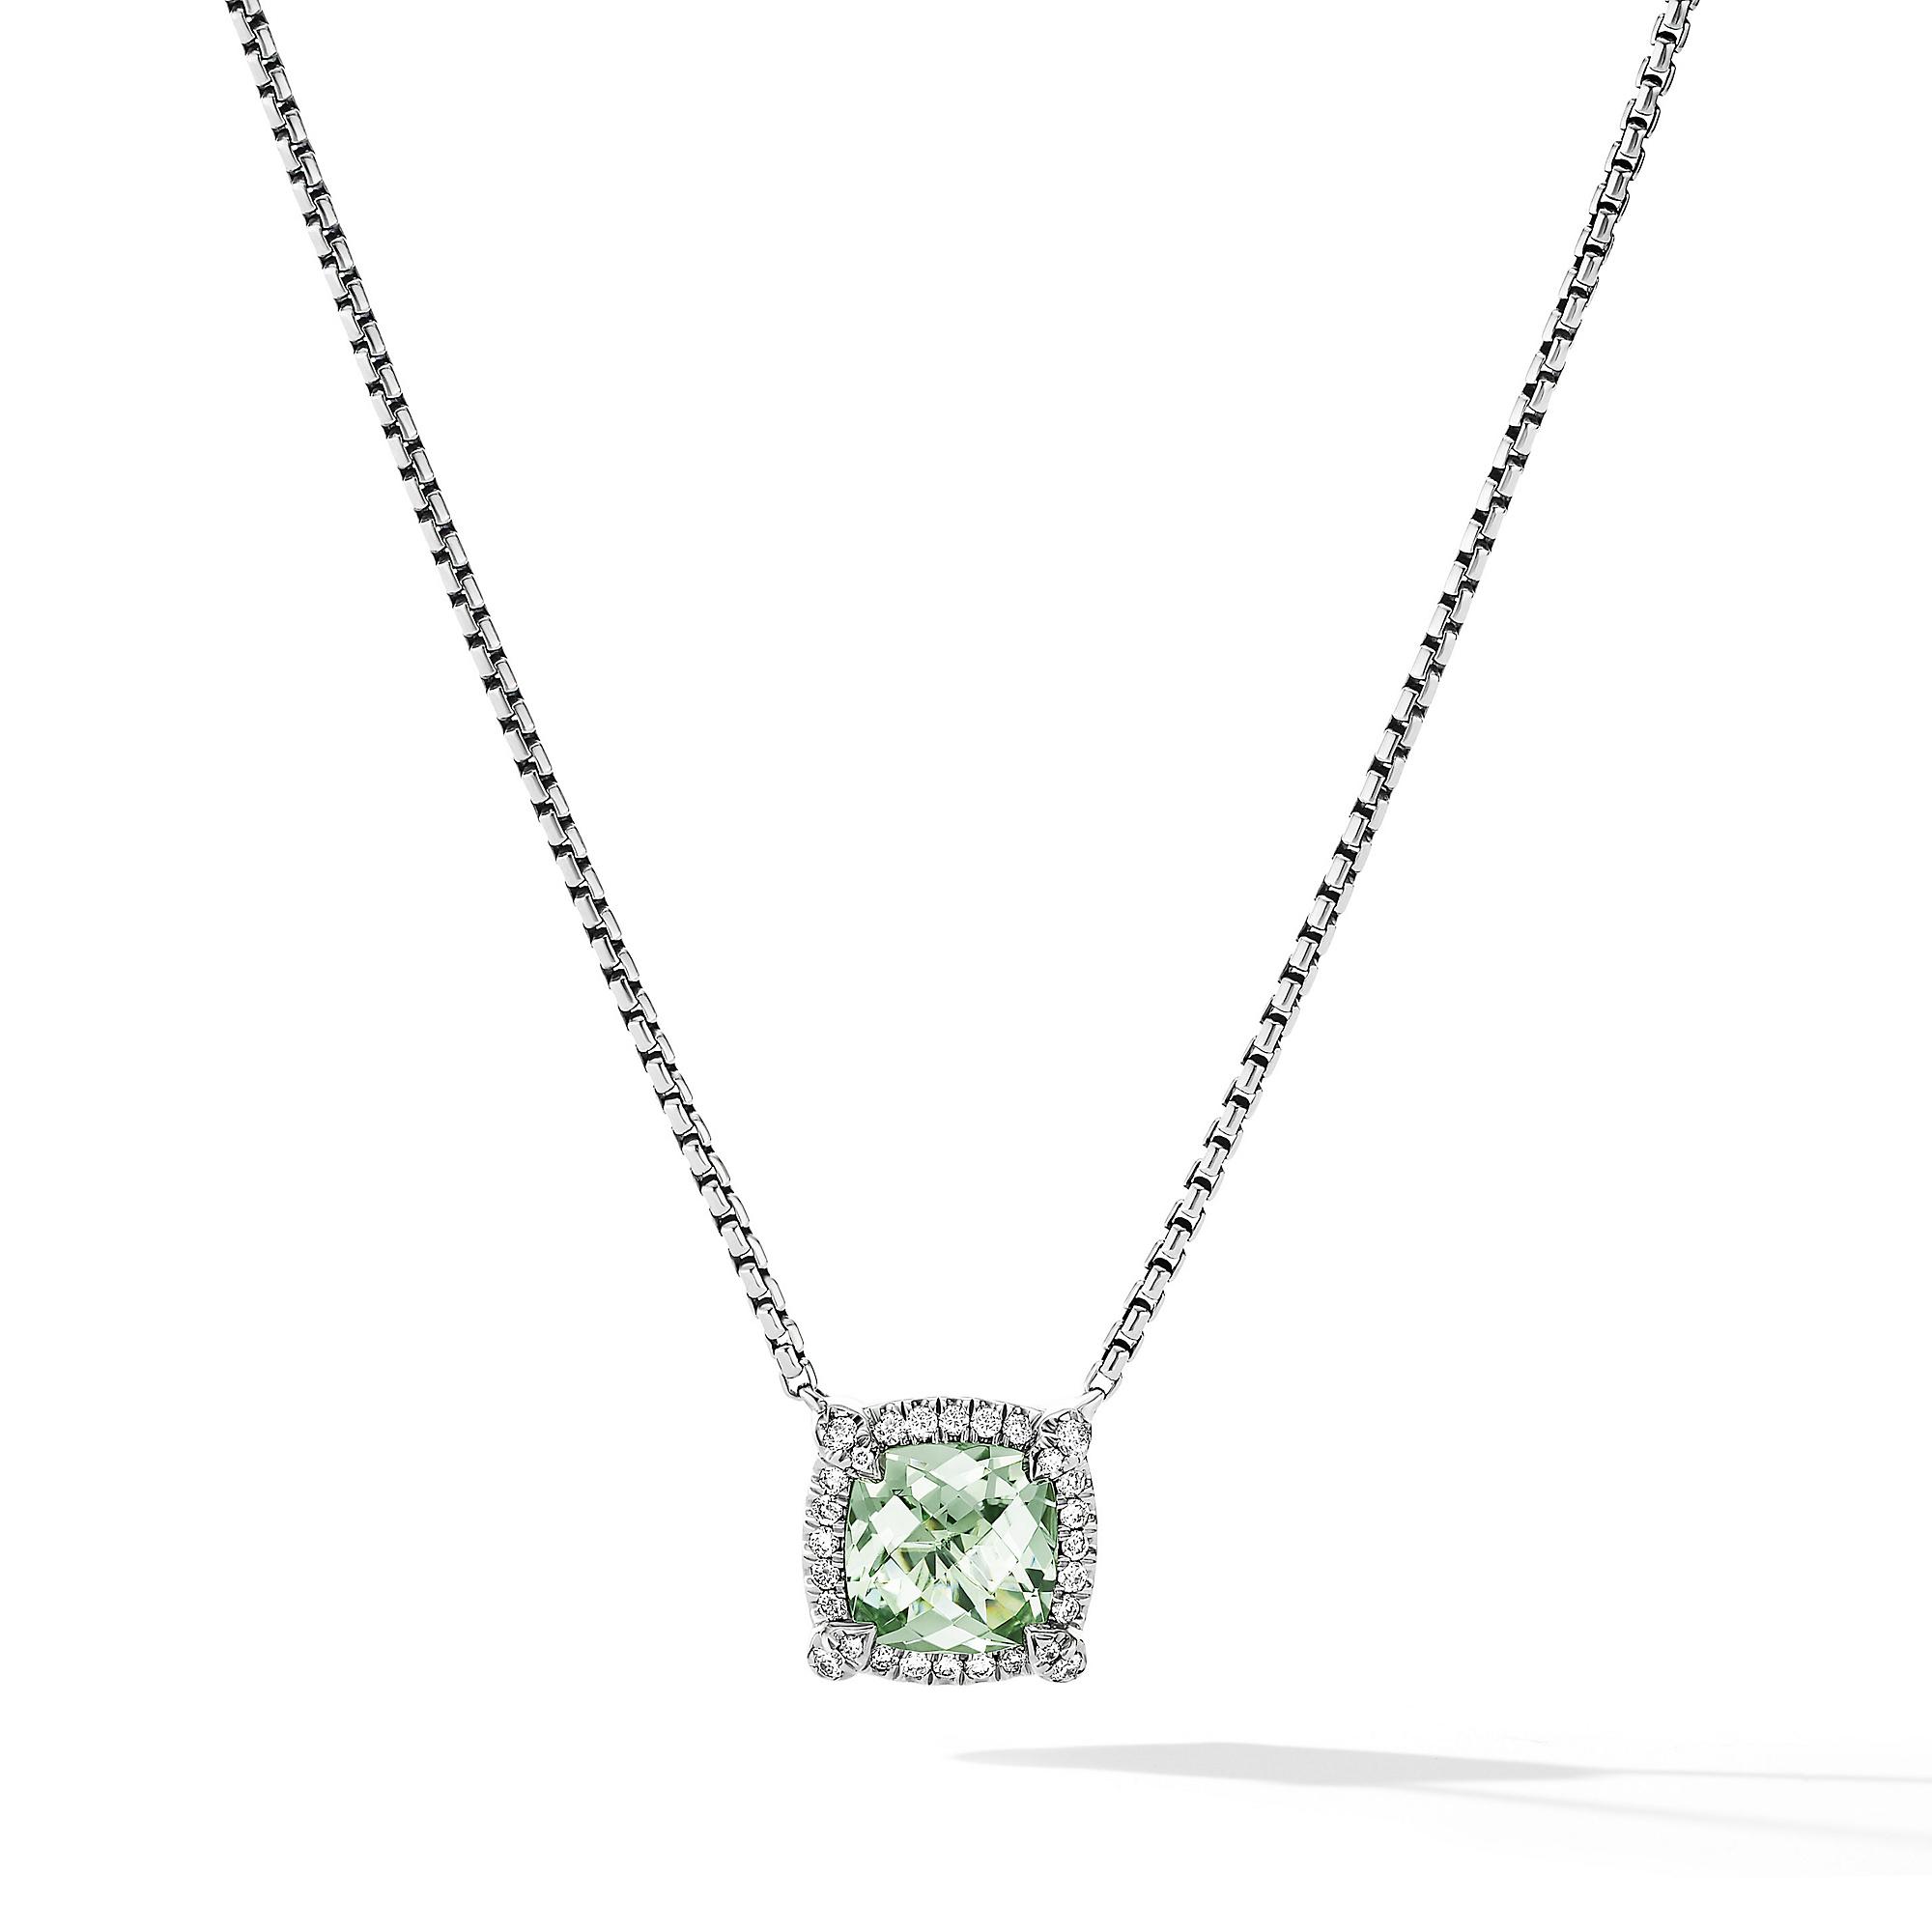 David Yurman Petite Chatelaine Pave Bezel Pendant Necklace with Prasiolite and Diamonds